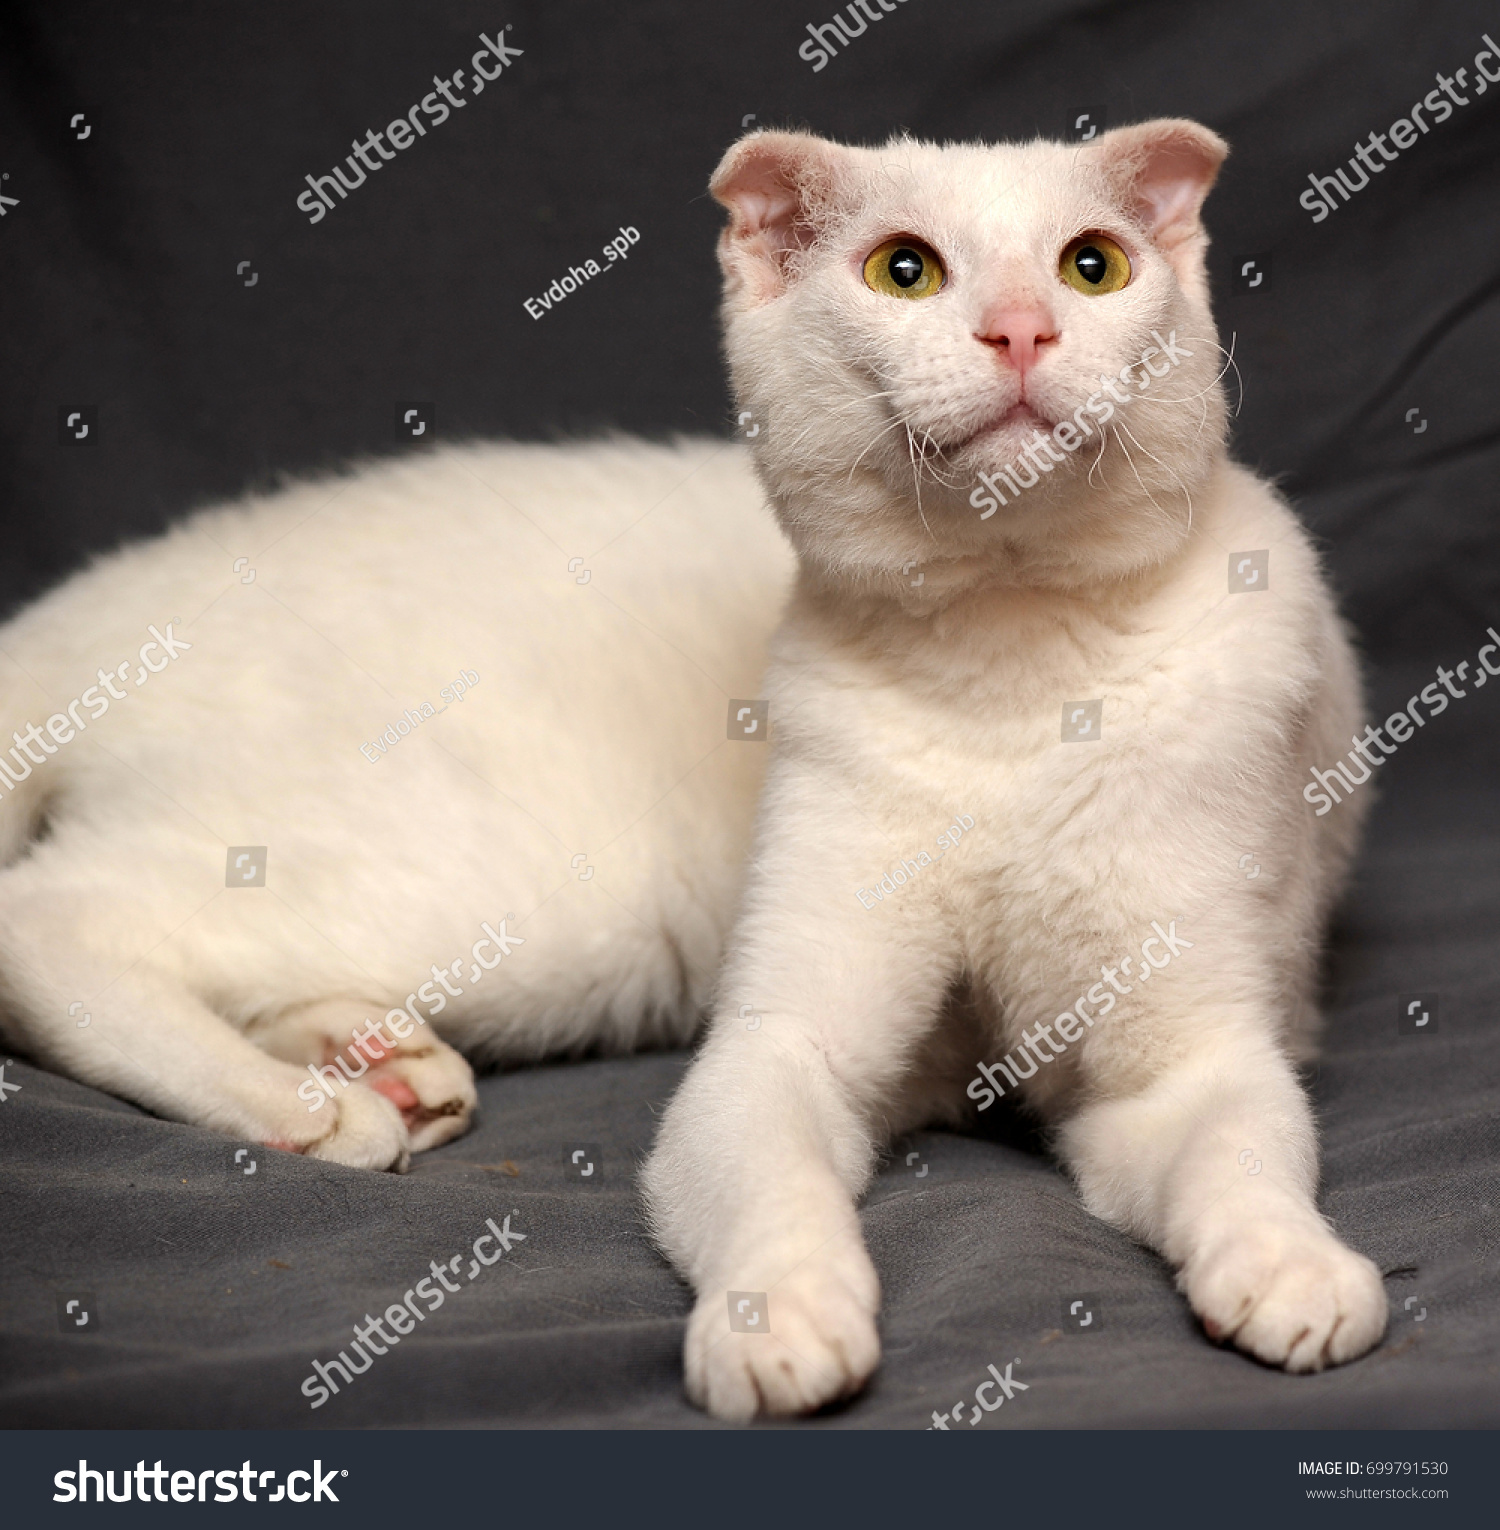 Portrait White Cat Breed Ukrainian Levkoy Stock Photo Edit Now 699791530